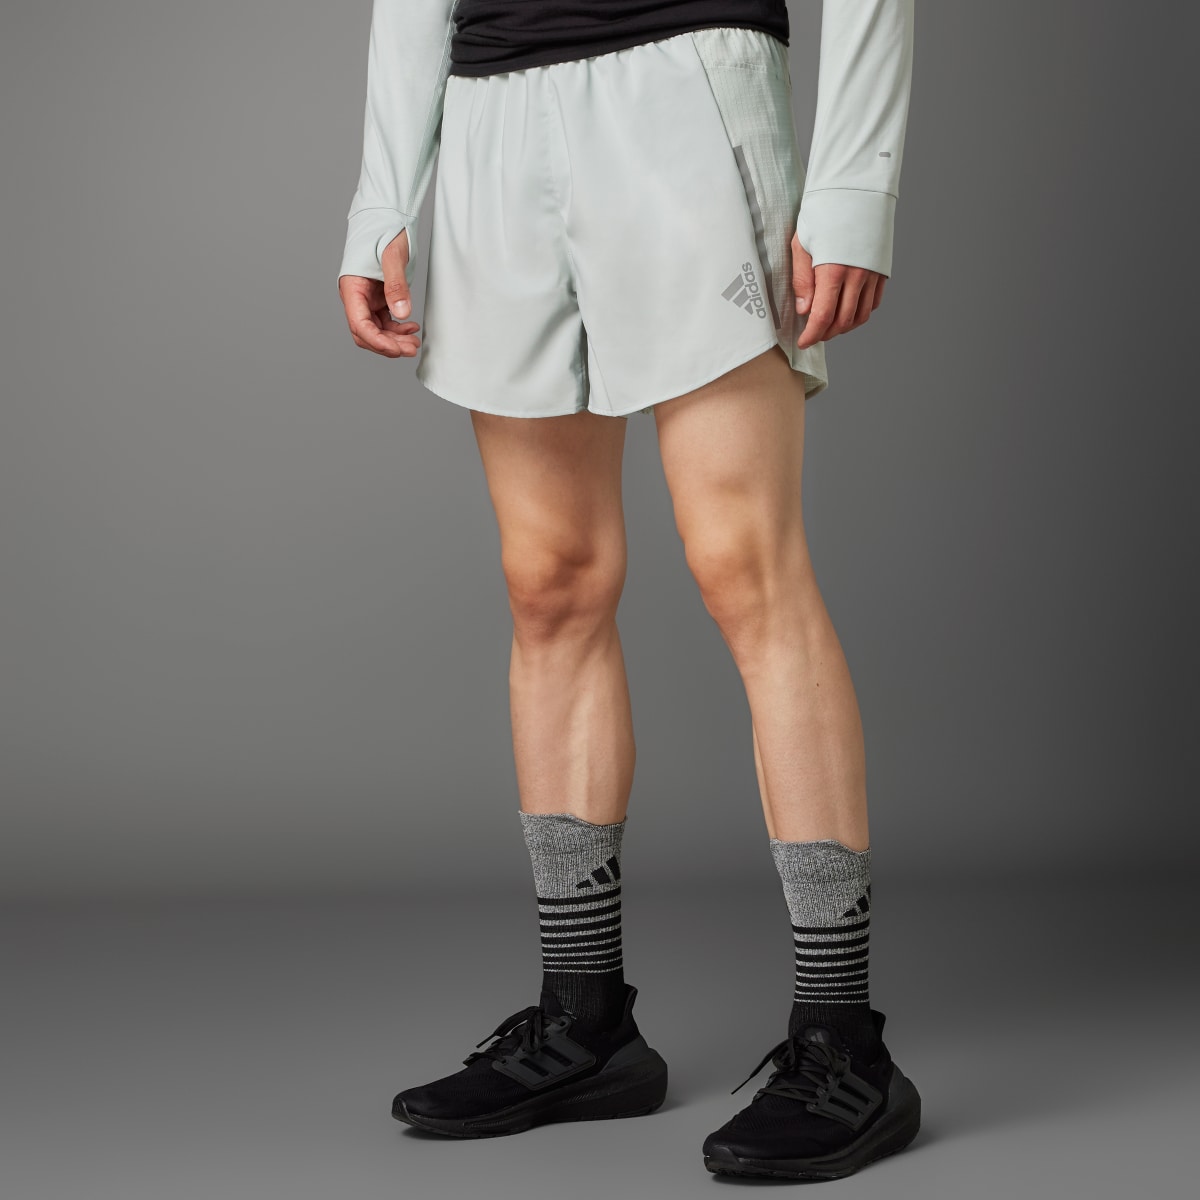 Adidas Designed 4 Running Shorts. 10